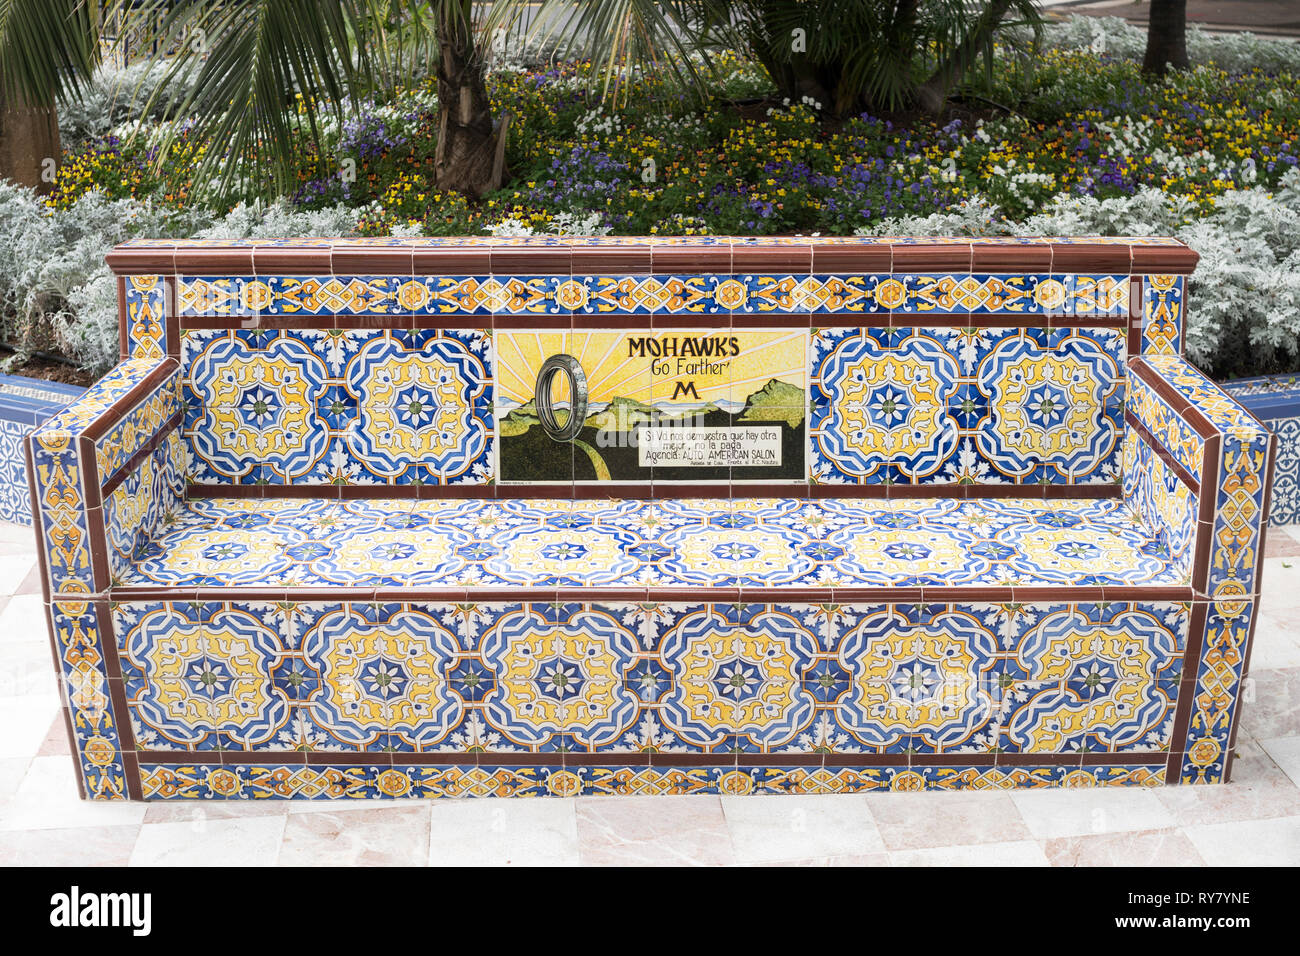 Old Mohawk tyres advertising slogan on ceramic tiled bench in the  Plaza de Los Patos in Santa Cruz de Tenerife, Tenerife, Canary Islands Stock Photo